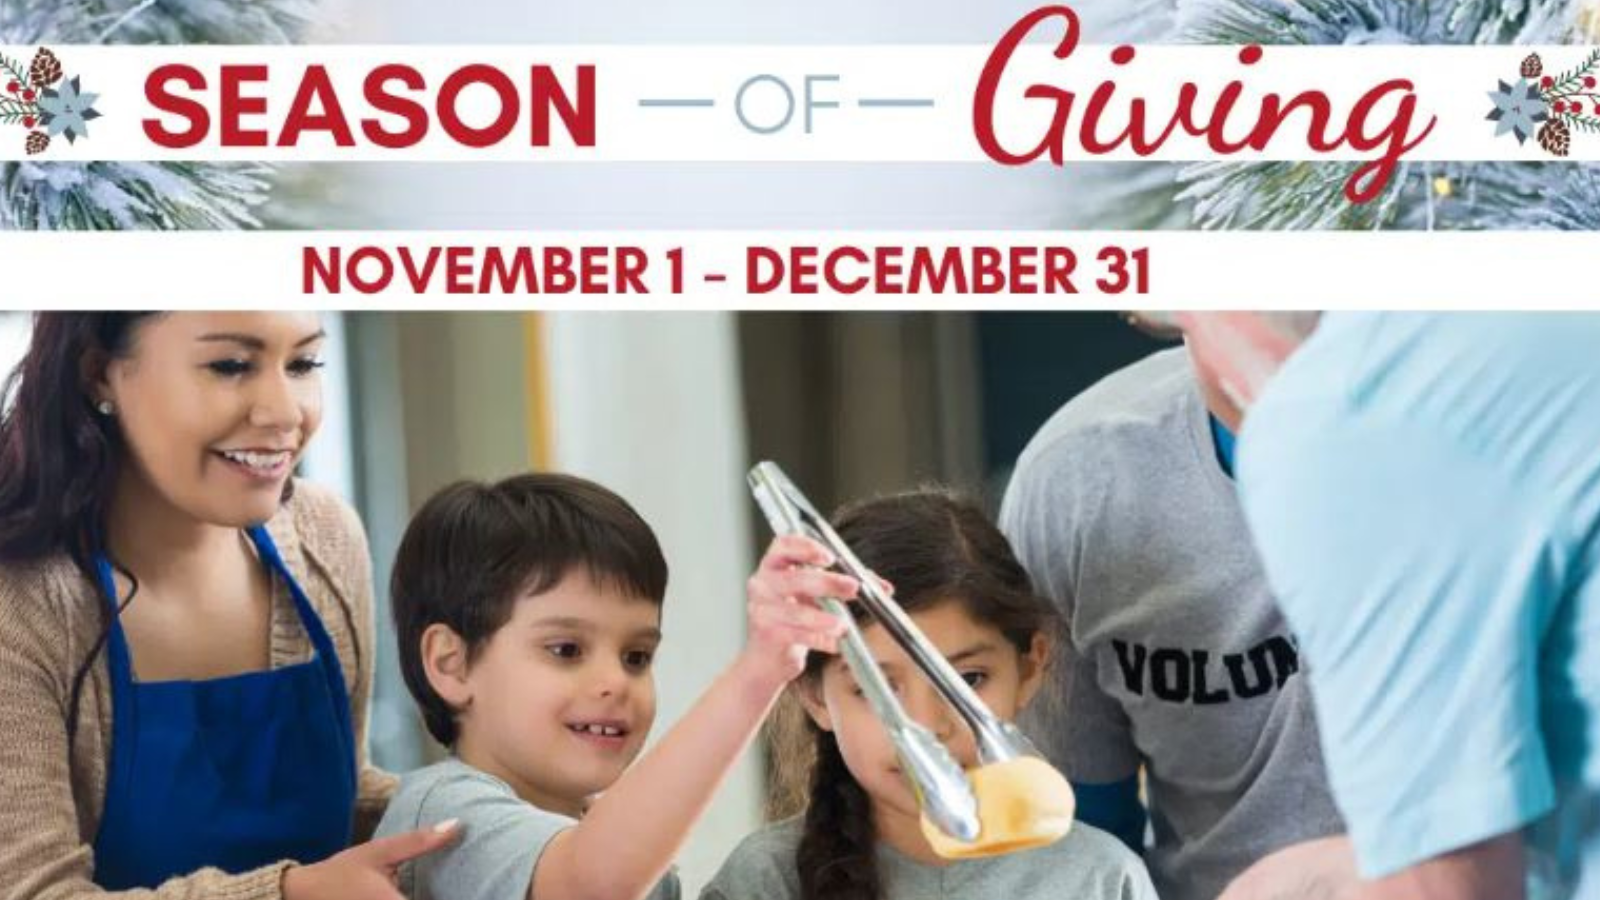 season of giving november 1 - december 31